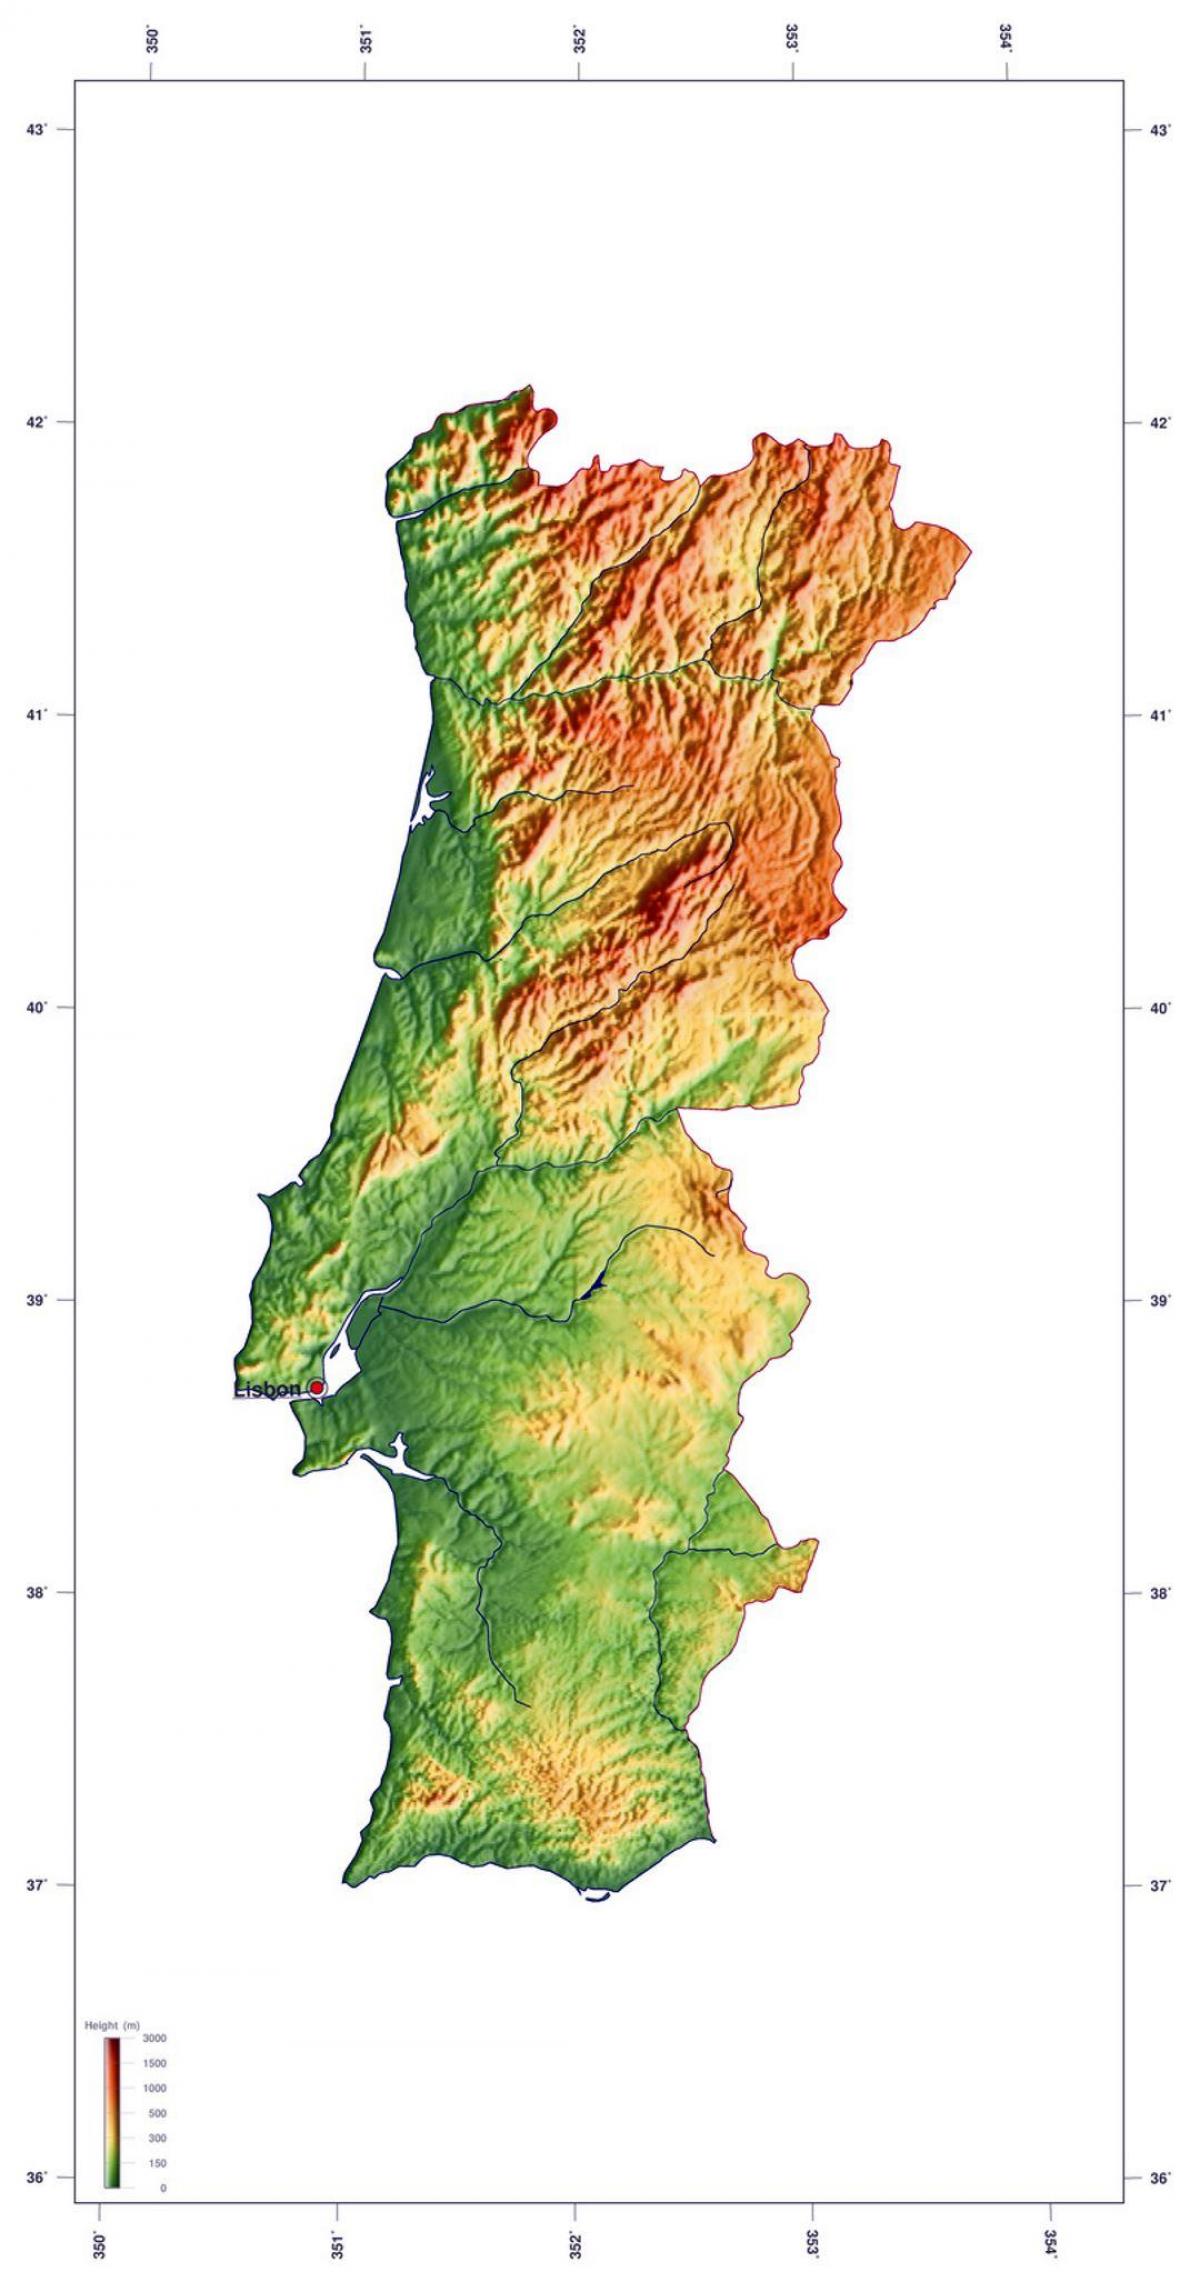 Mapa de altitude de Portugal